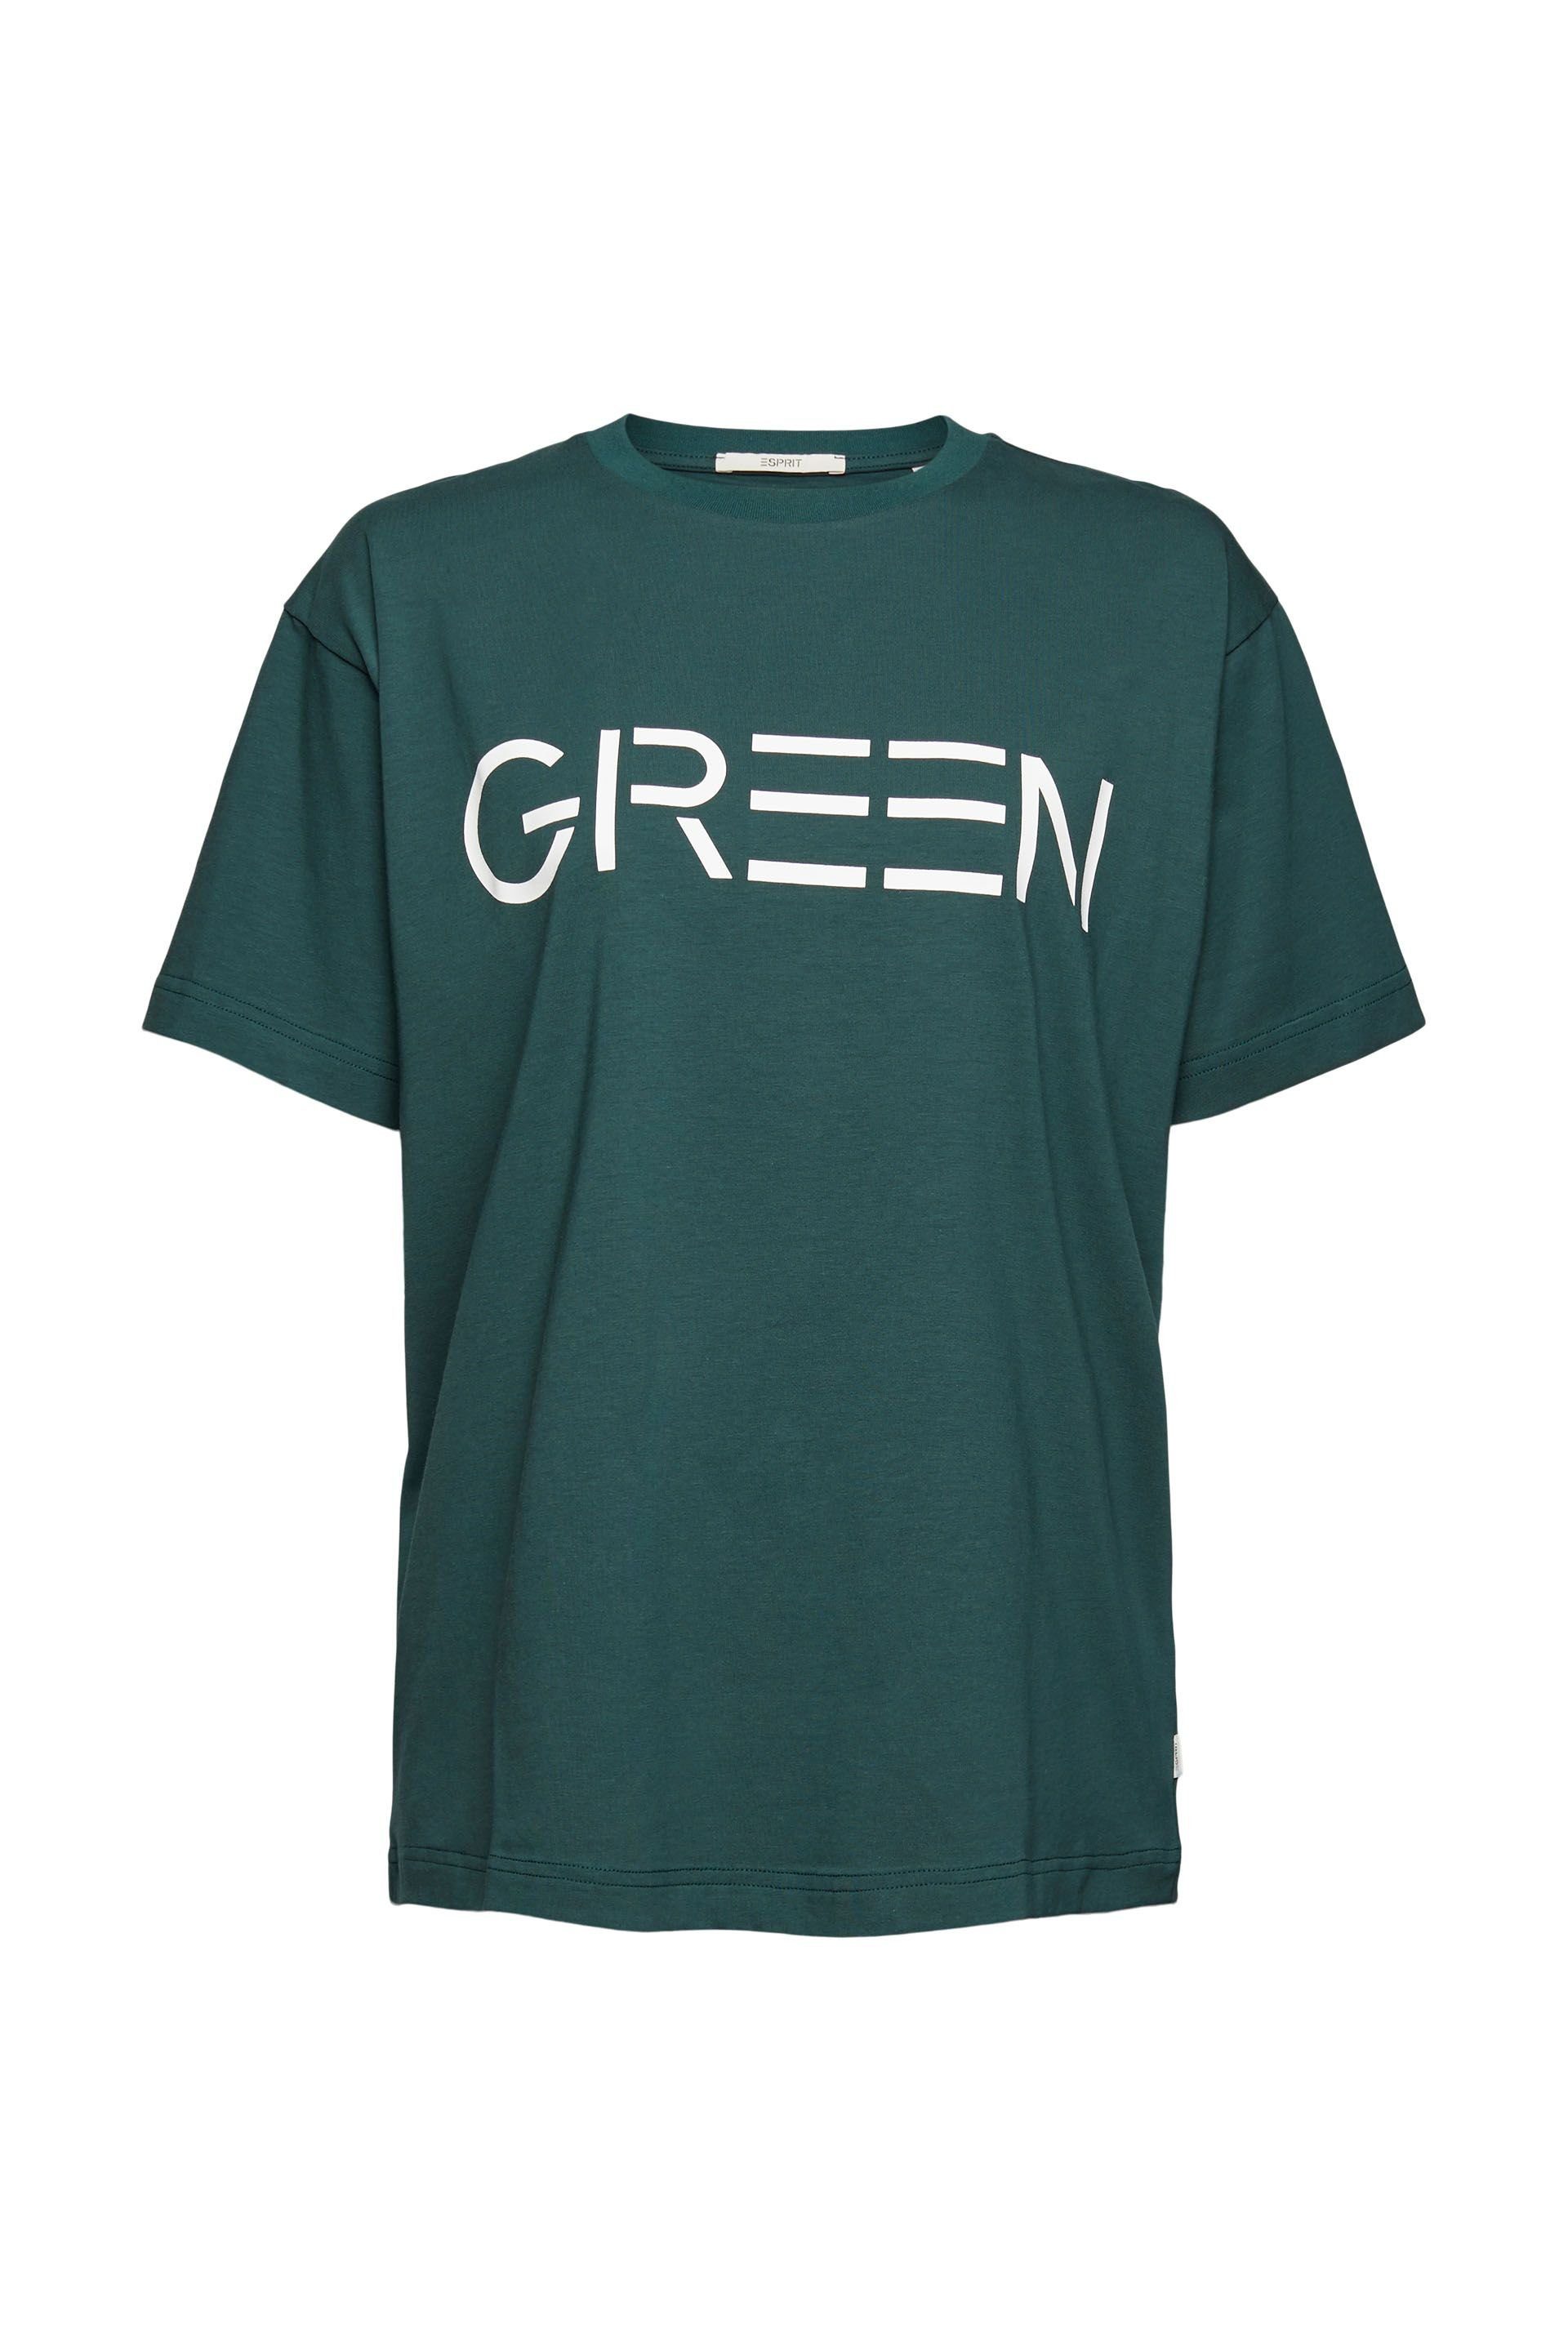 green Esprit dark T-Shirt